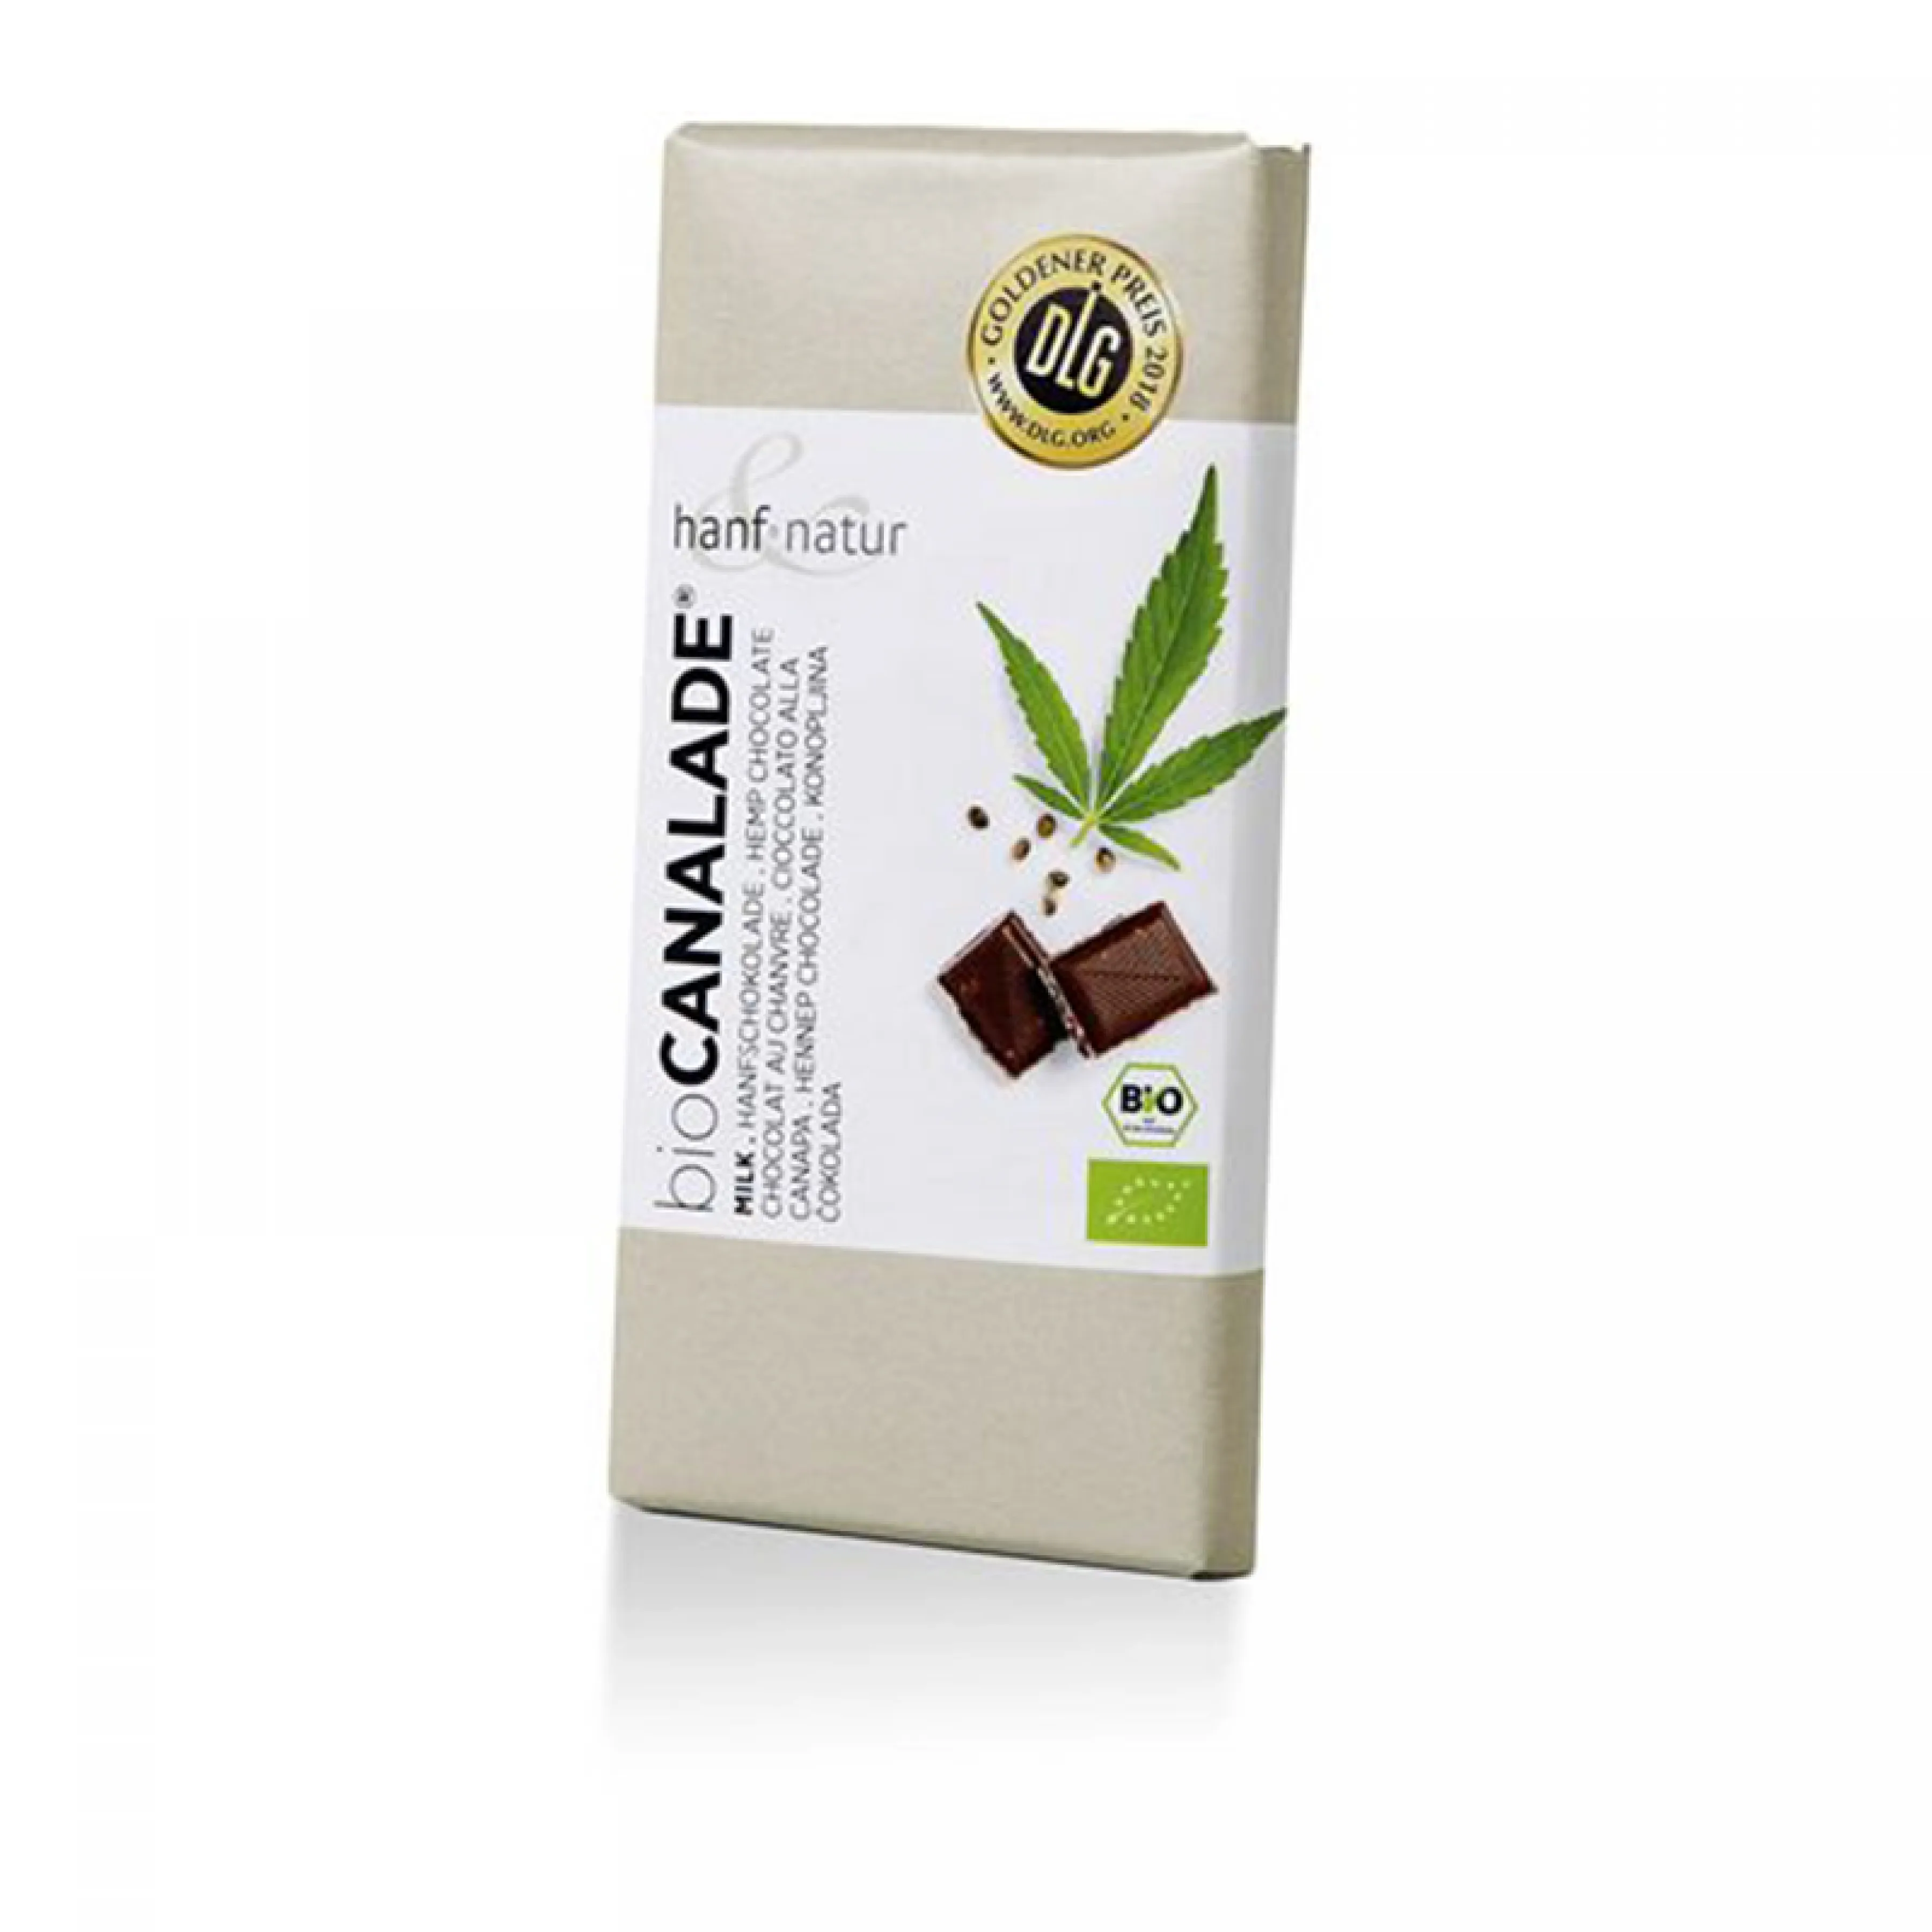 achat cbd Hanf Natur – Bio Canalade – Chocolat au lait